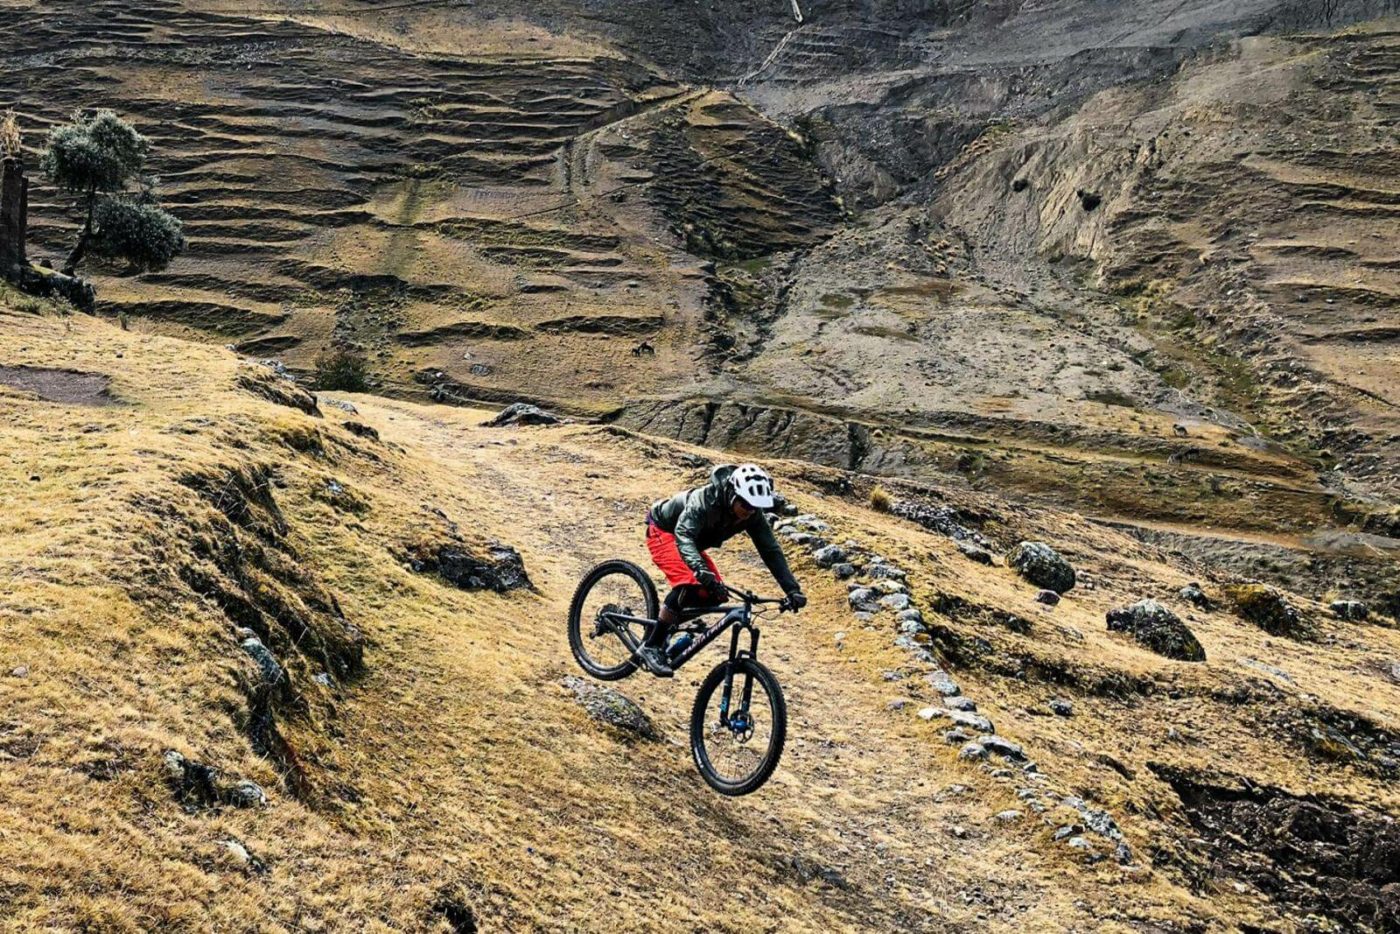 A person biking down a mountain trail in Peru.